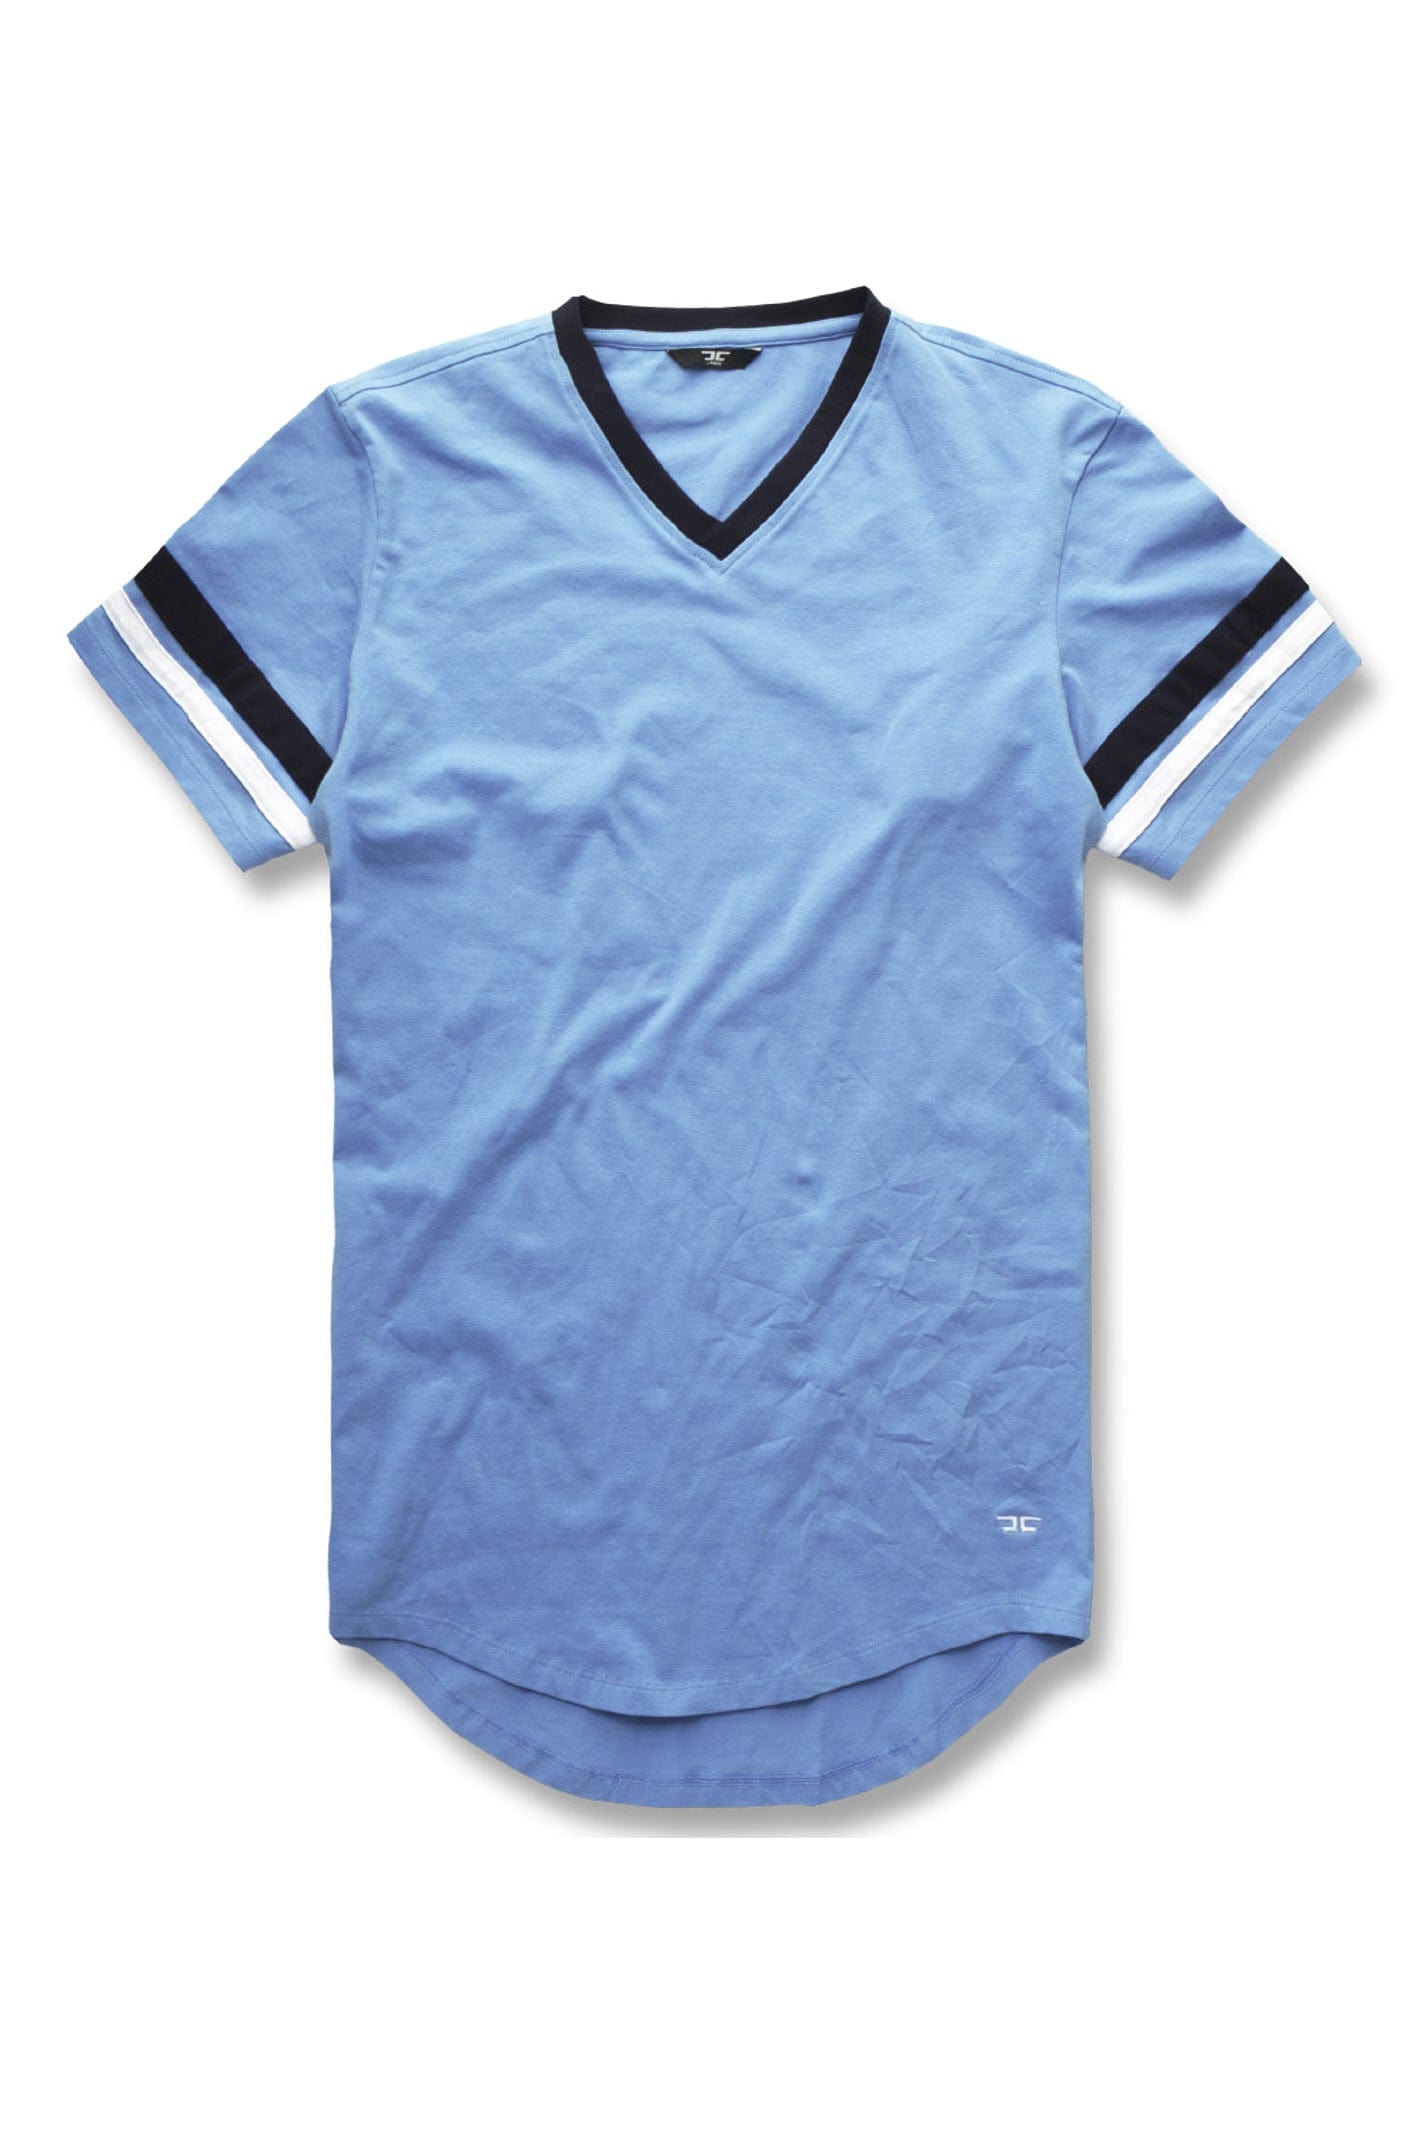 carolina blue jordan shirt